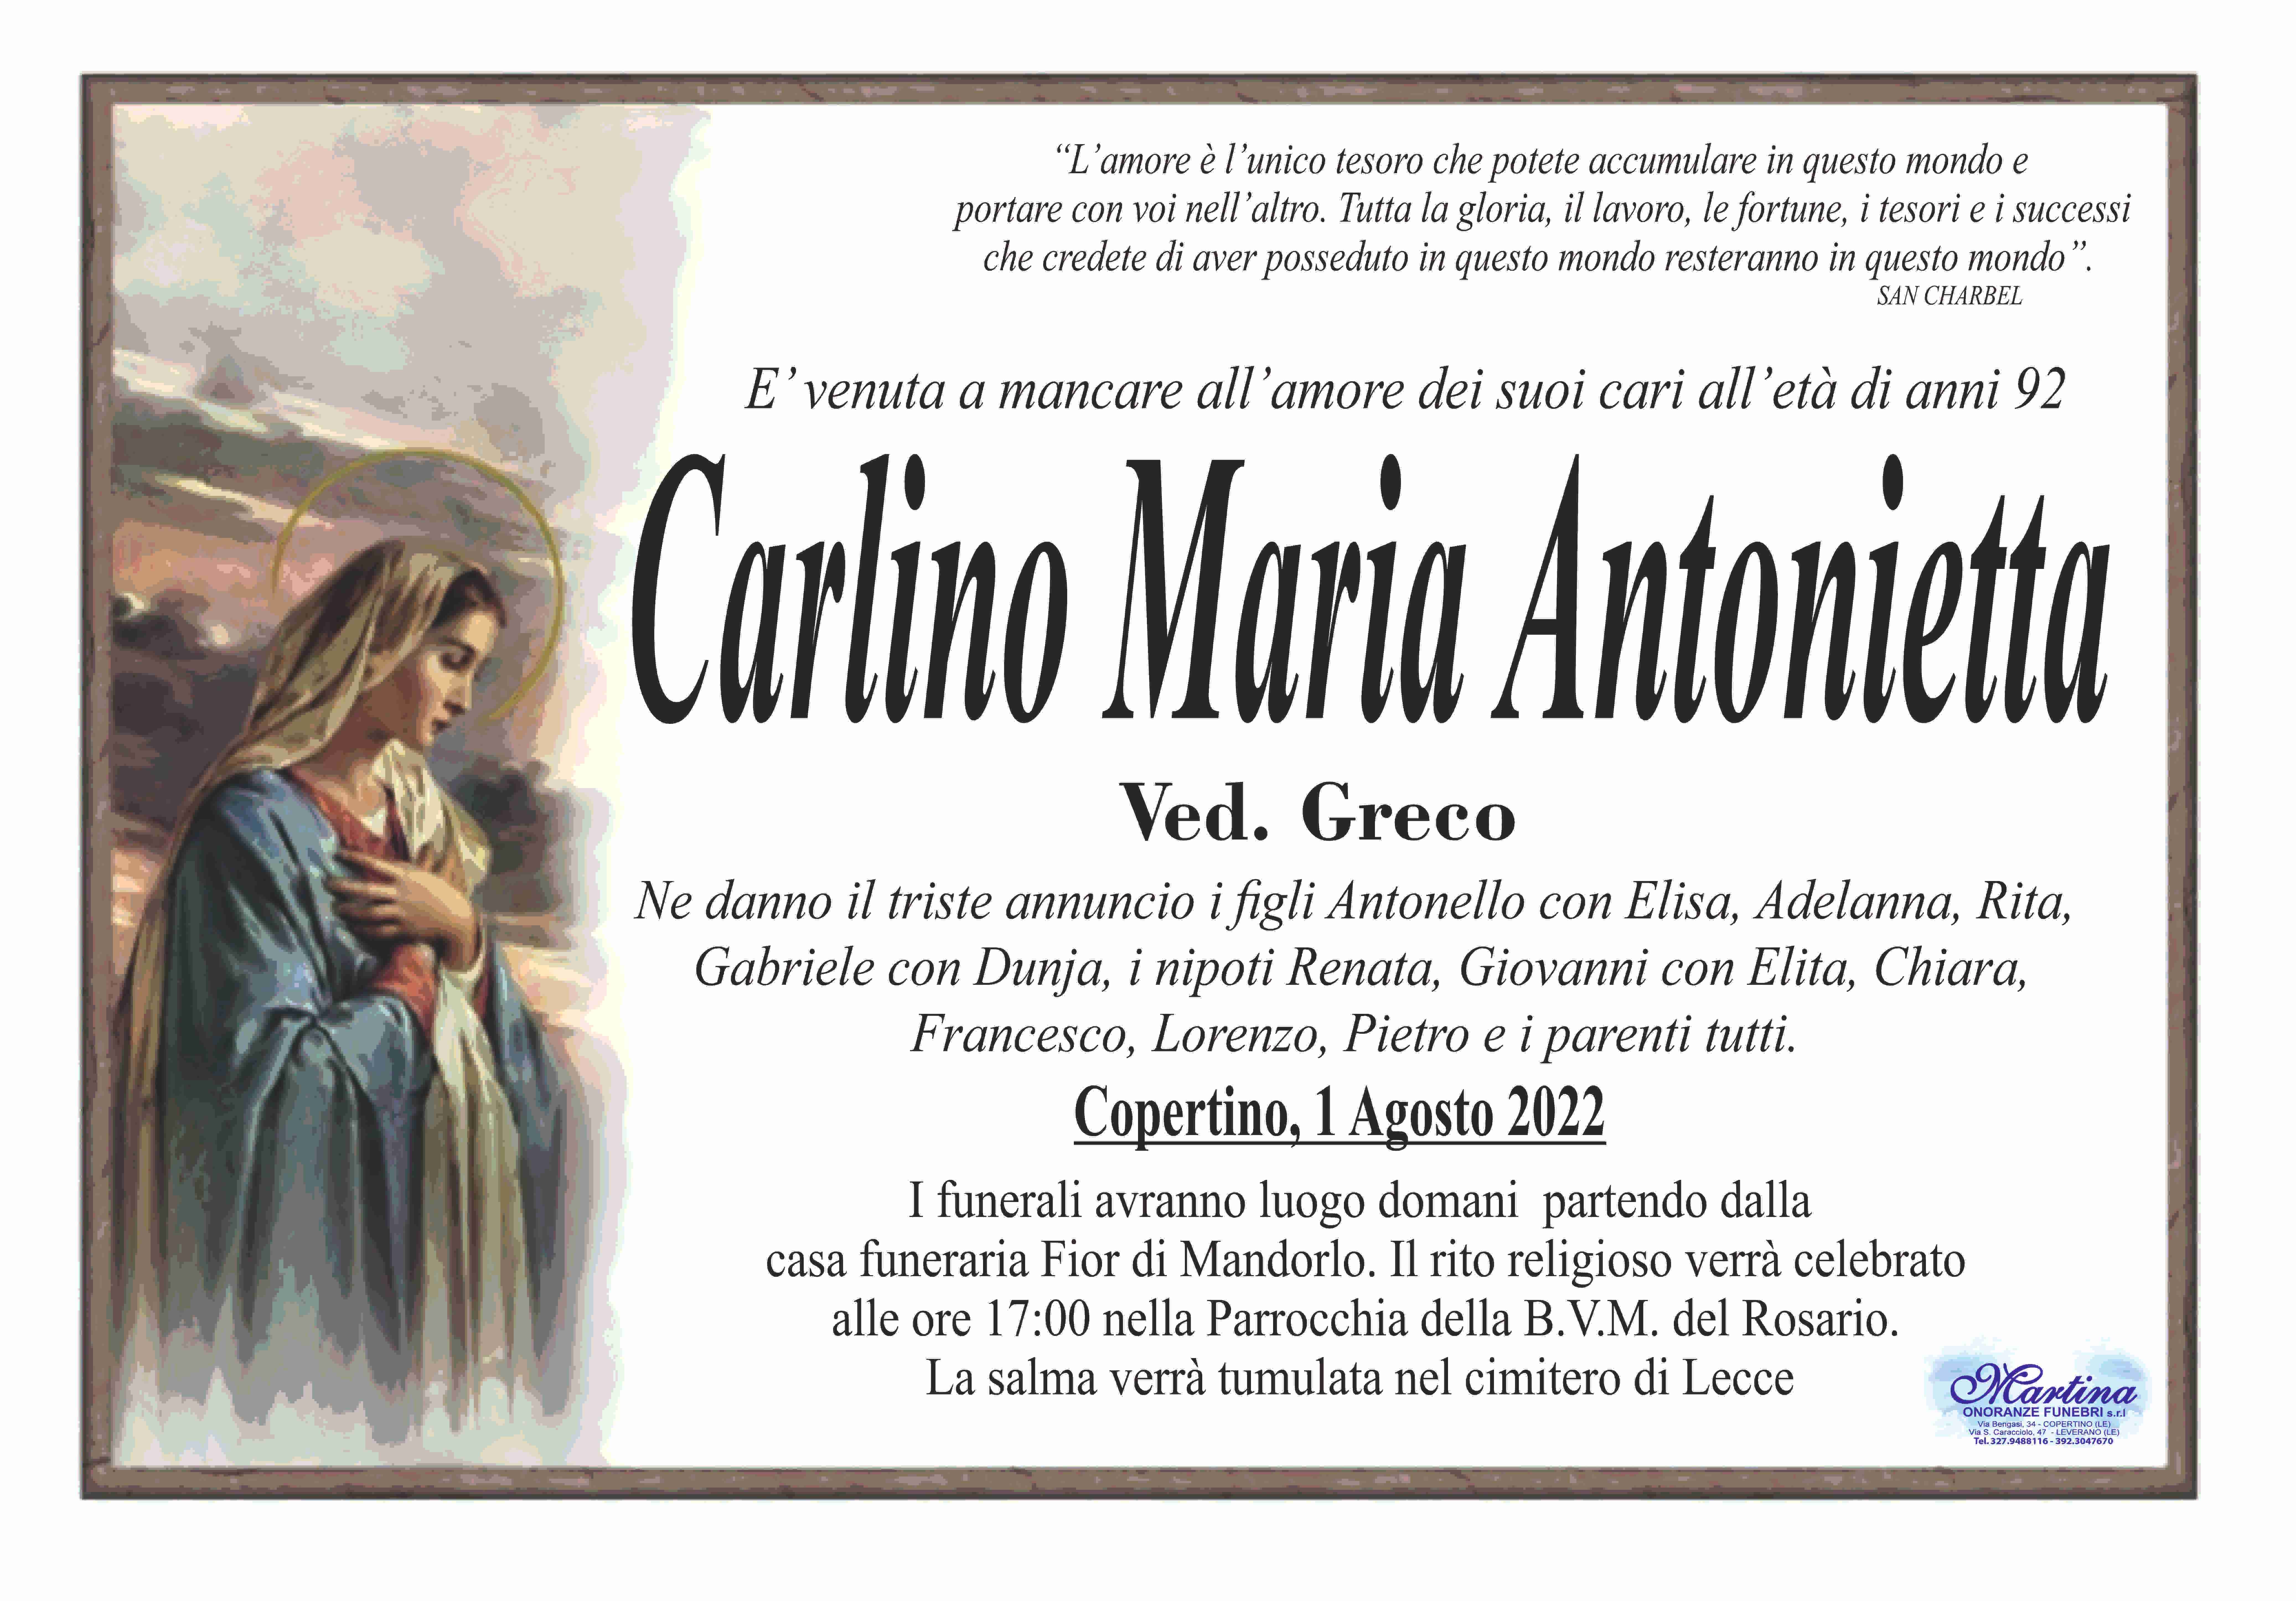 Maria Antonietta Carlino